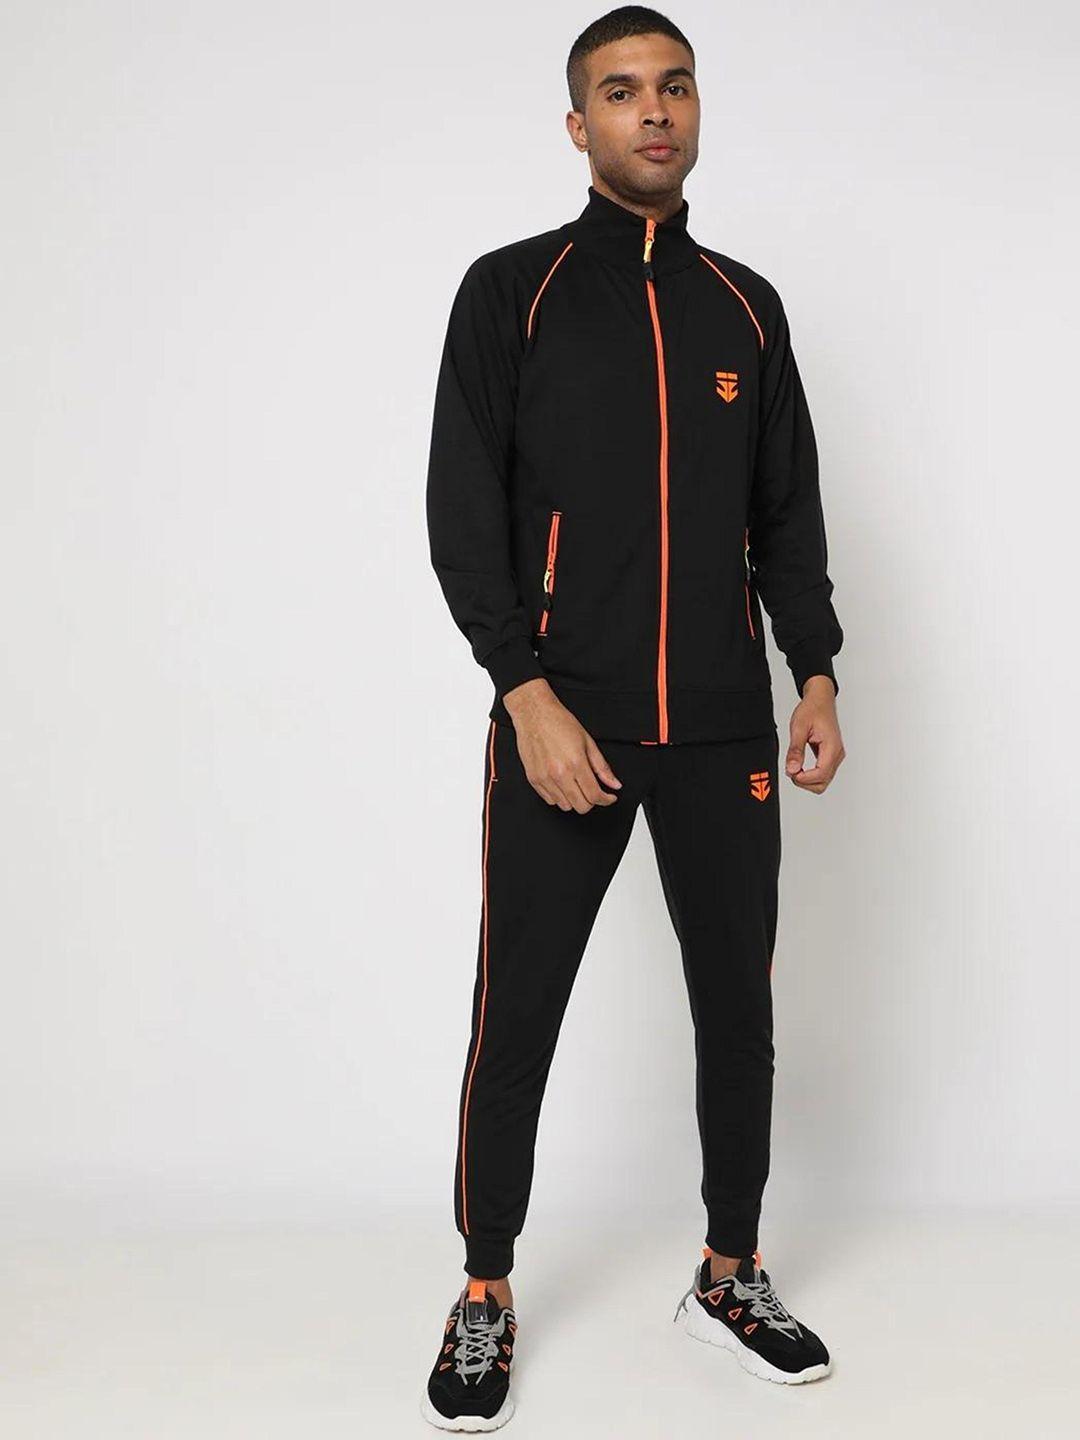 sports52 wear men black brand logo printed pure cotton tracksuit